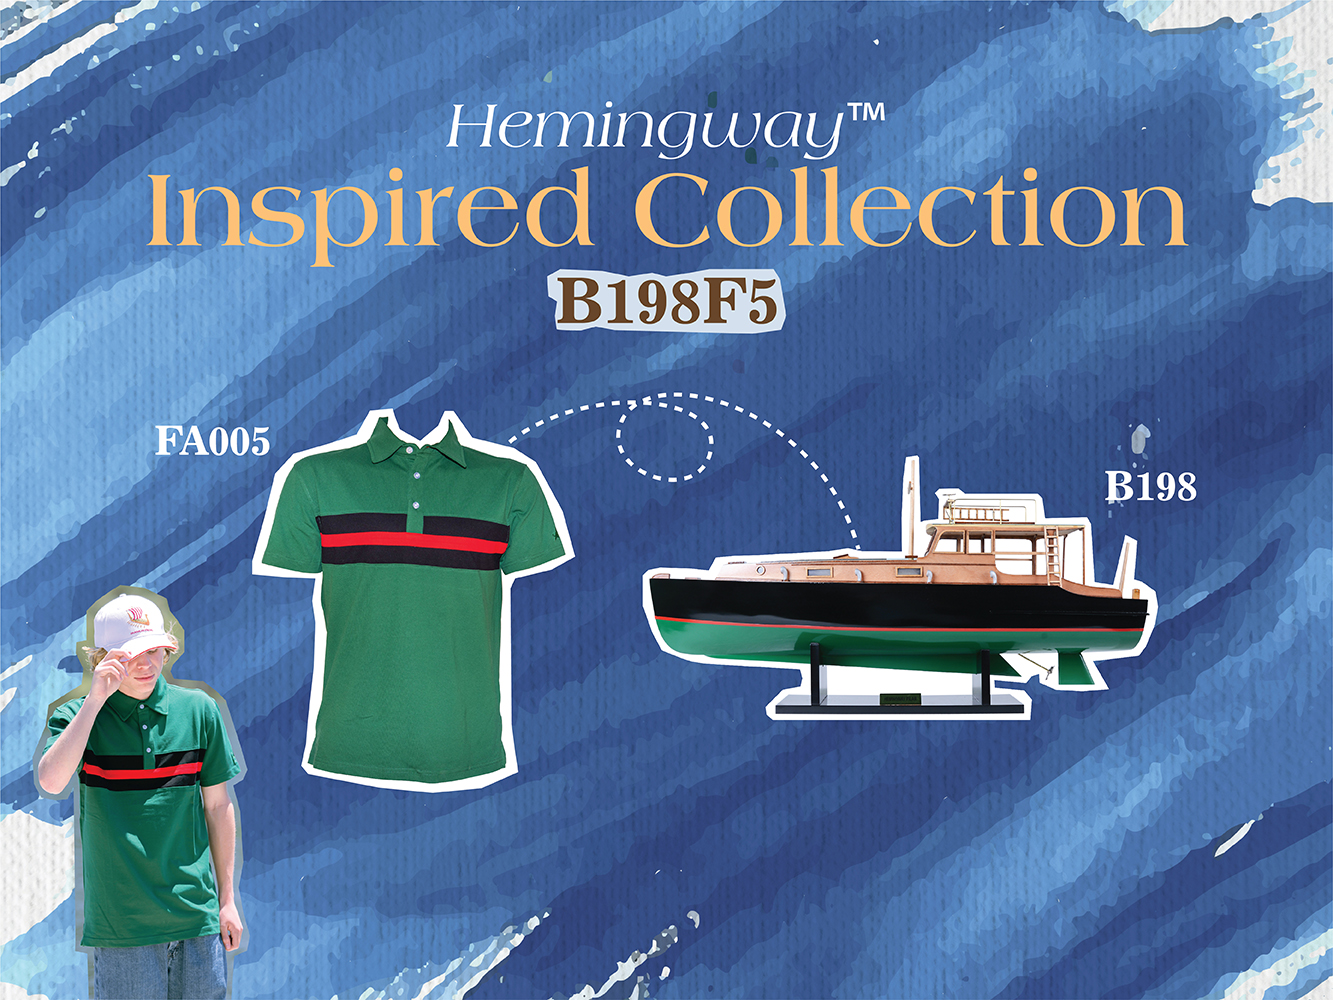 B198F5 Hemingway Pilar Fishing Boat Combo: A Model and Polo Shirt Set b198f5-hemingway-pilar-fishing-boat-combo-a-model-and-polo-shirt-set-l01.jpg